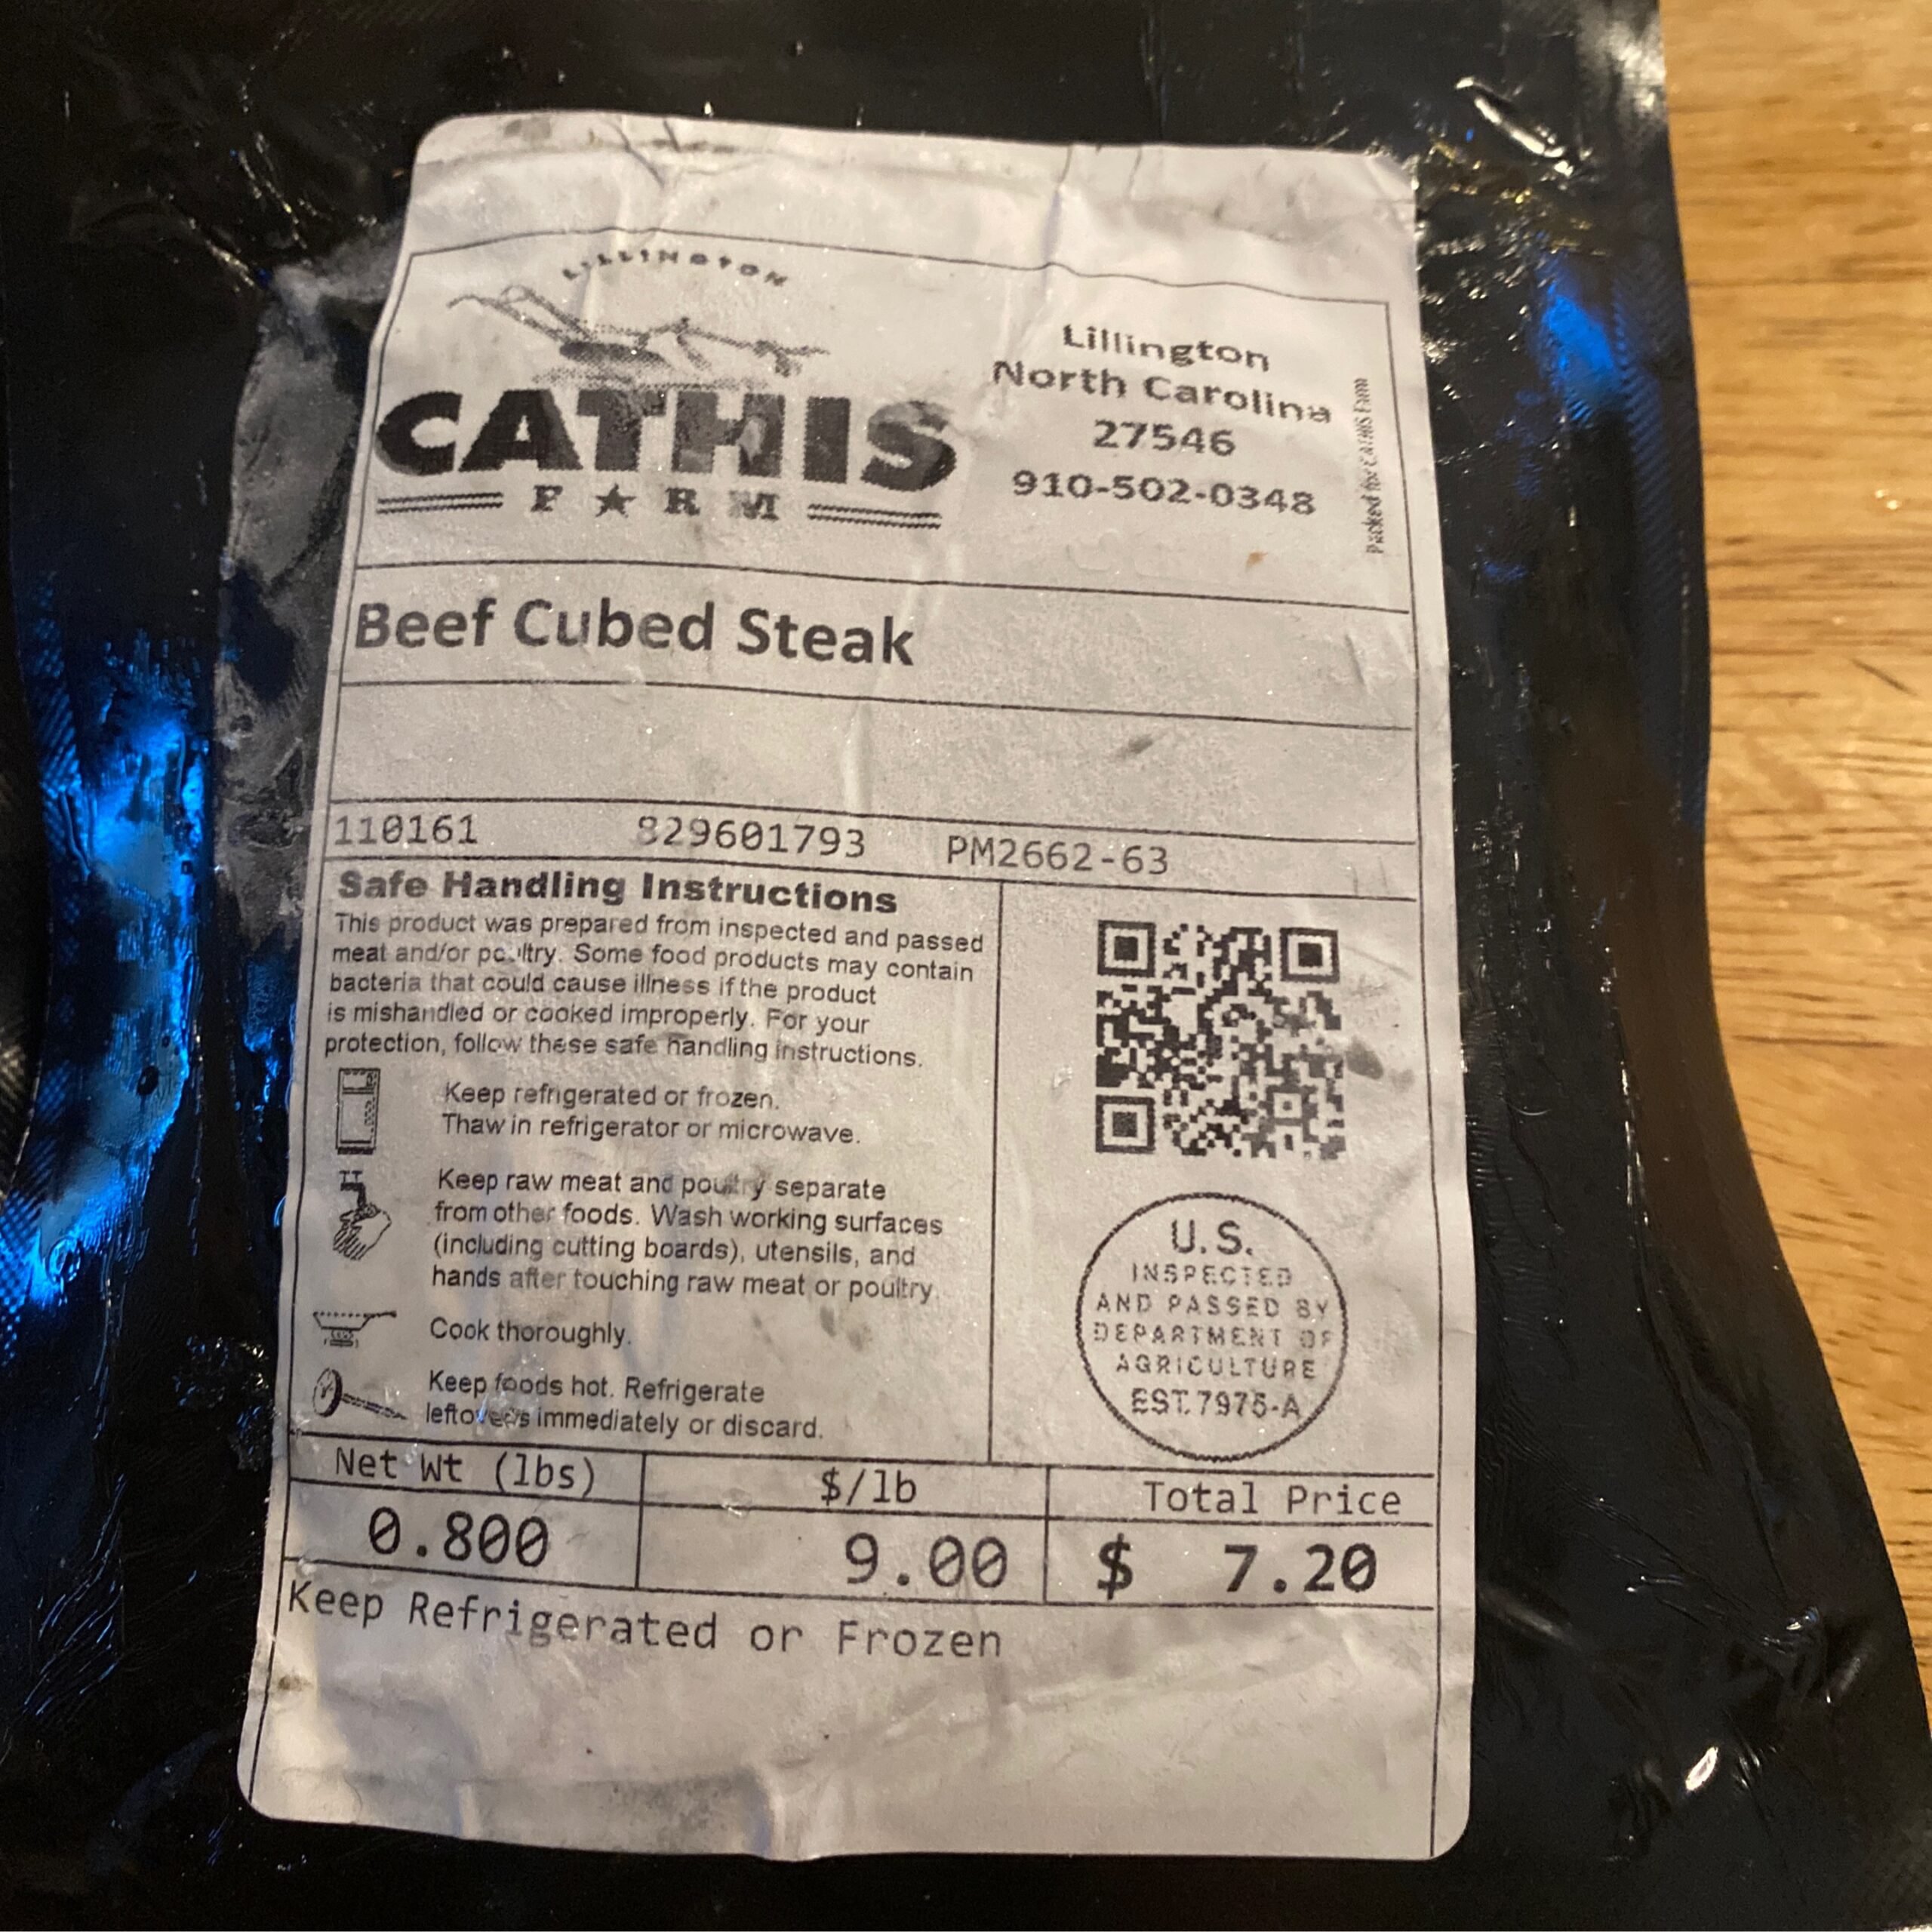 Cathis Farm Beef Cubed Steak